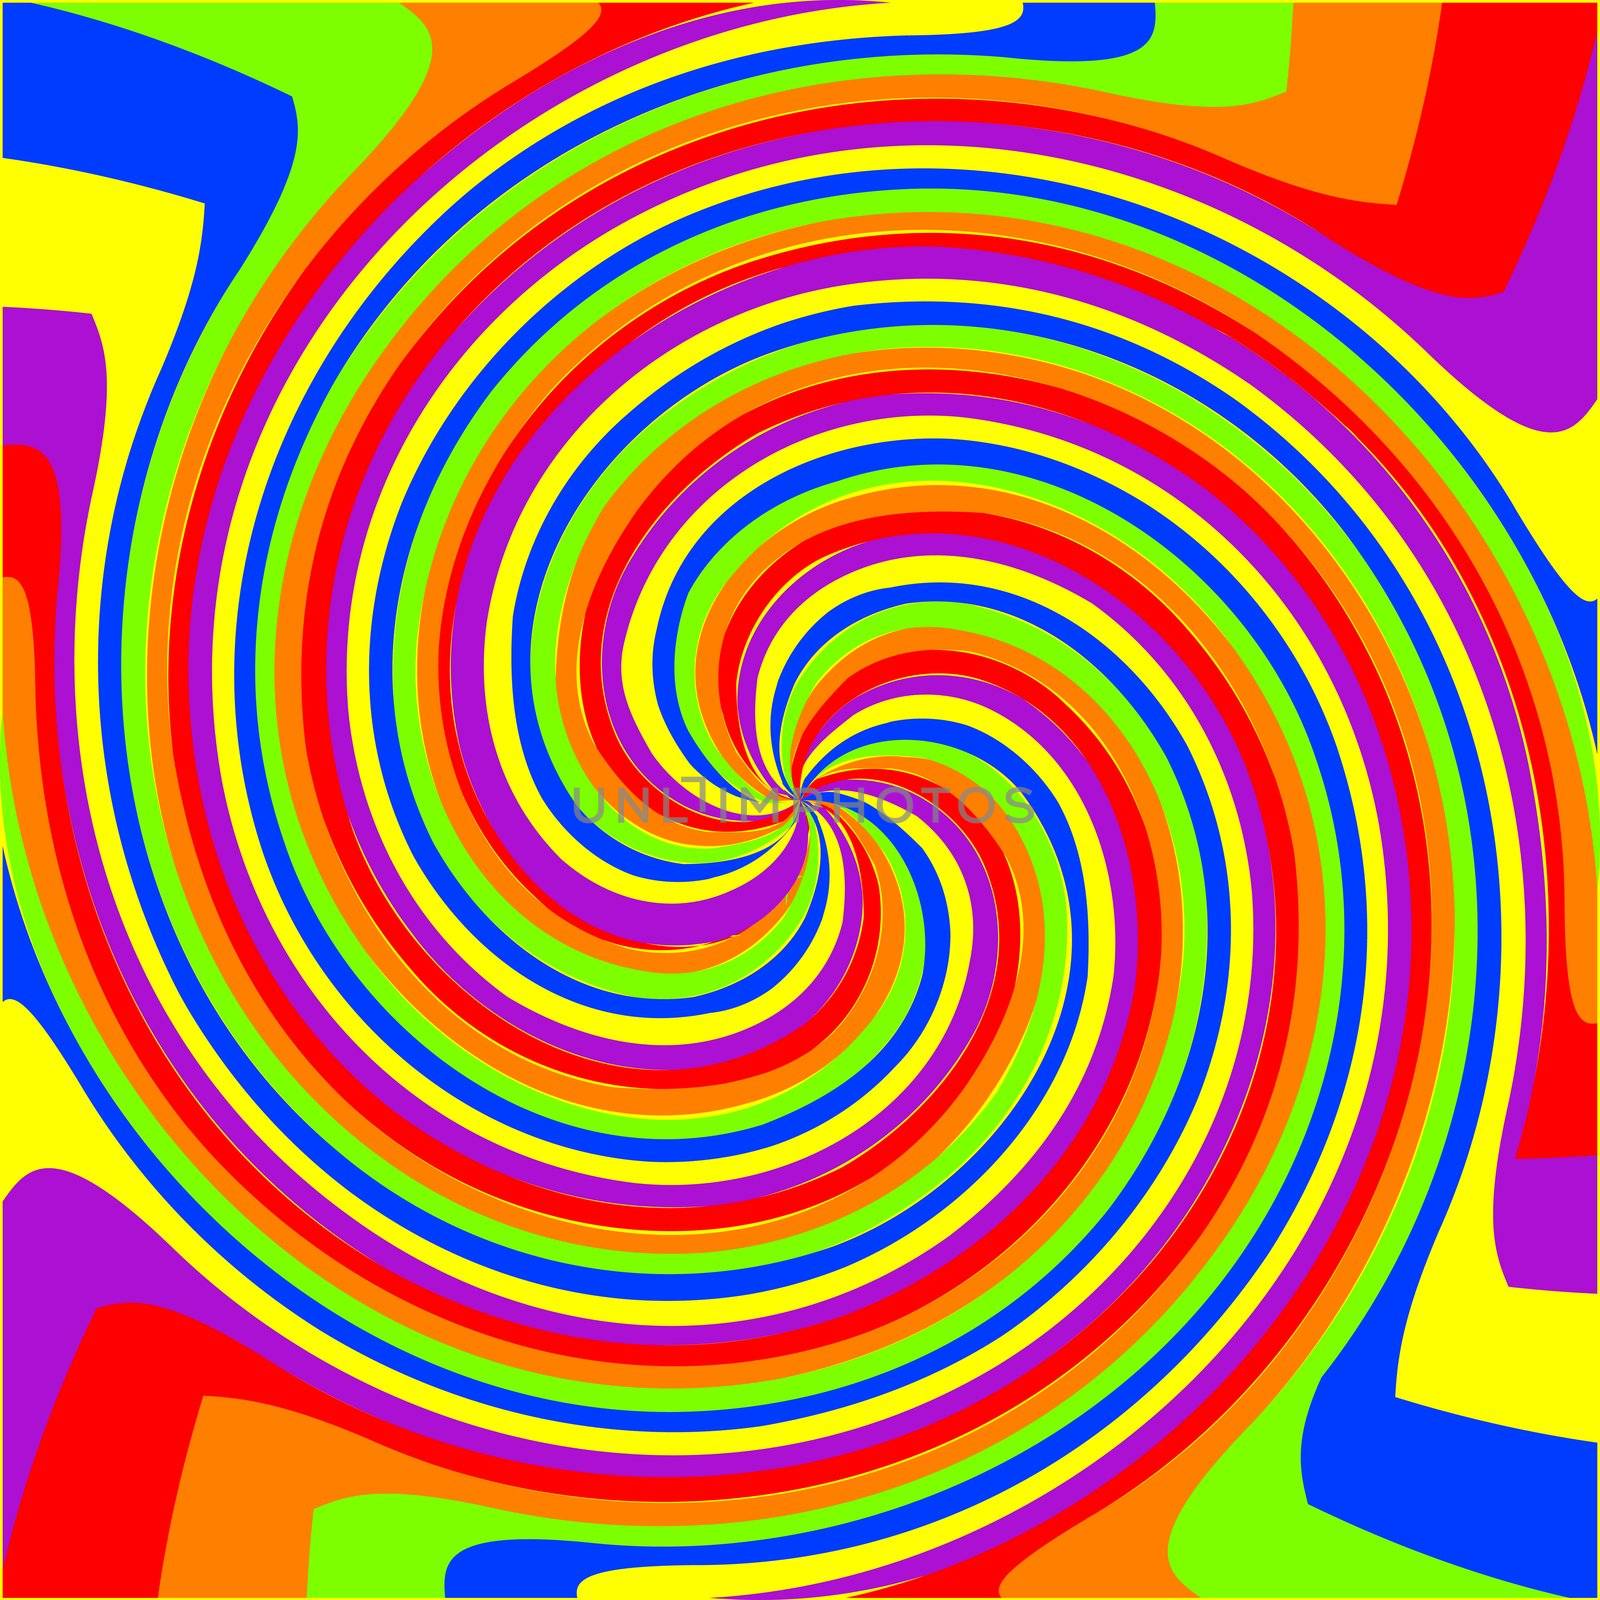 swirl rainbow composition by robertosch